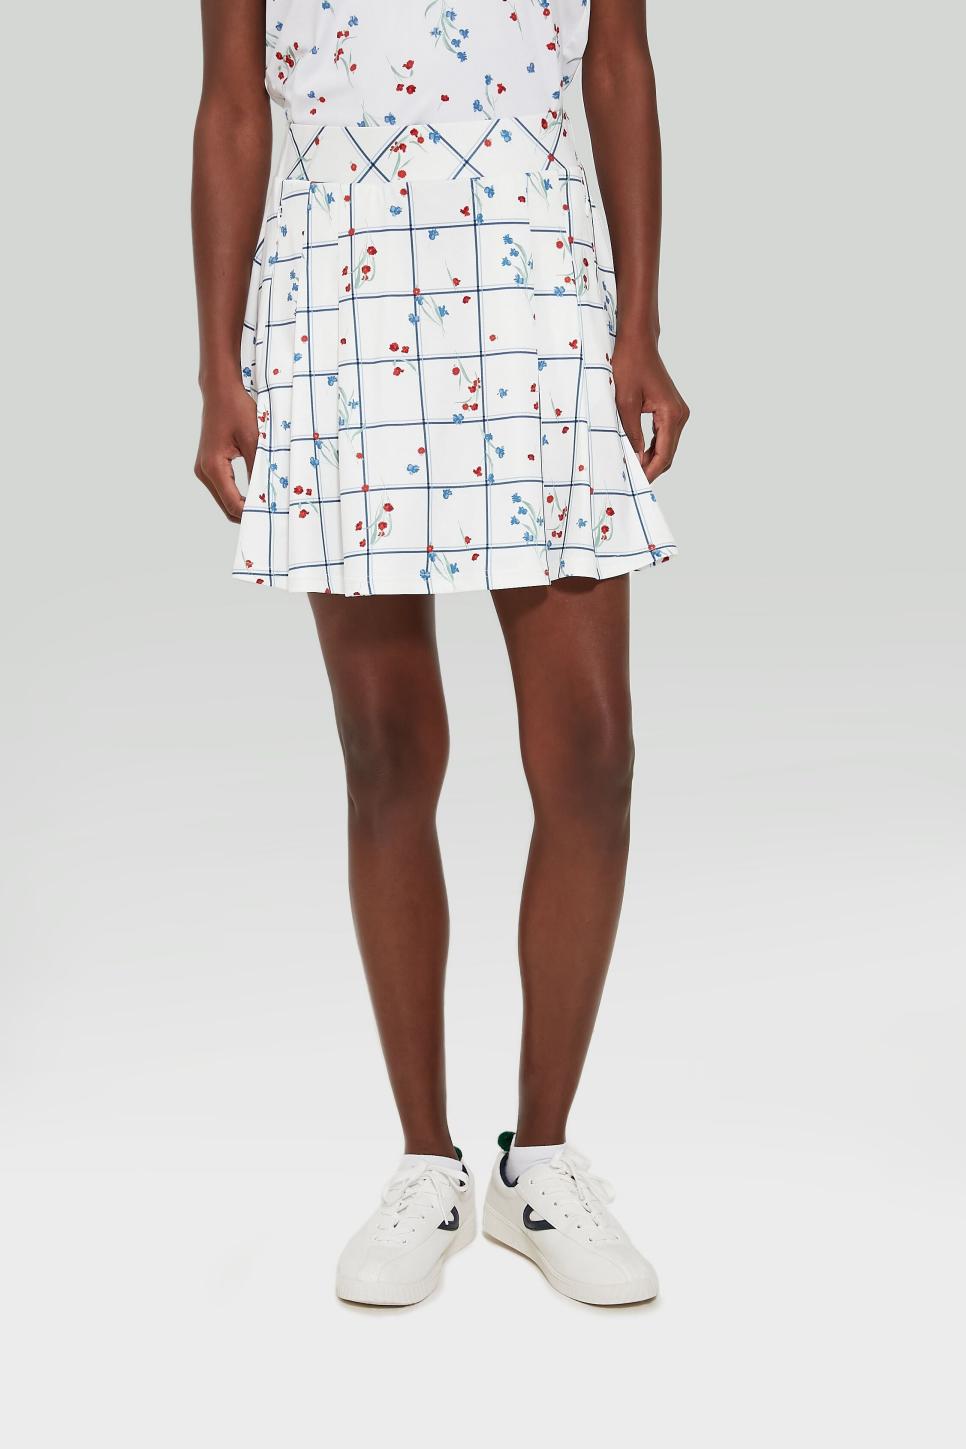 rx-tuckernucktuckernuck-hyannis-floral-16-inch-on-par-golf-skirt.jpeg